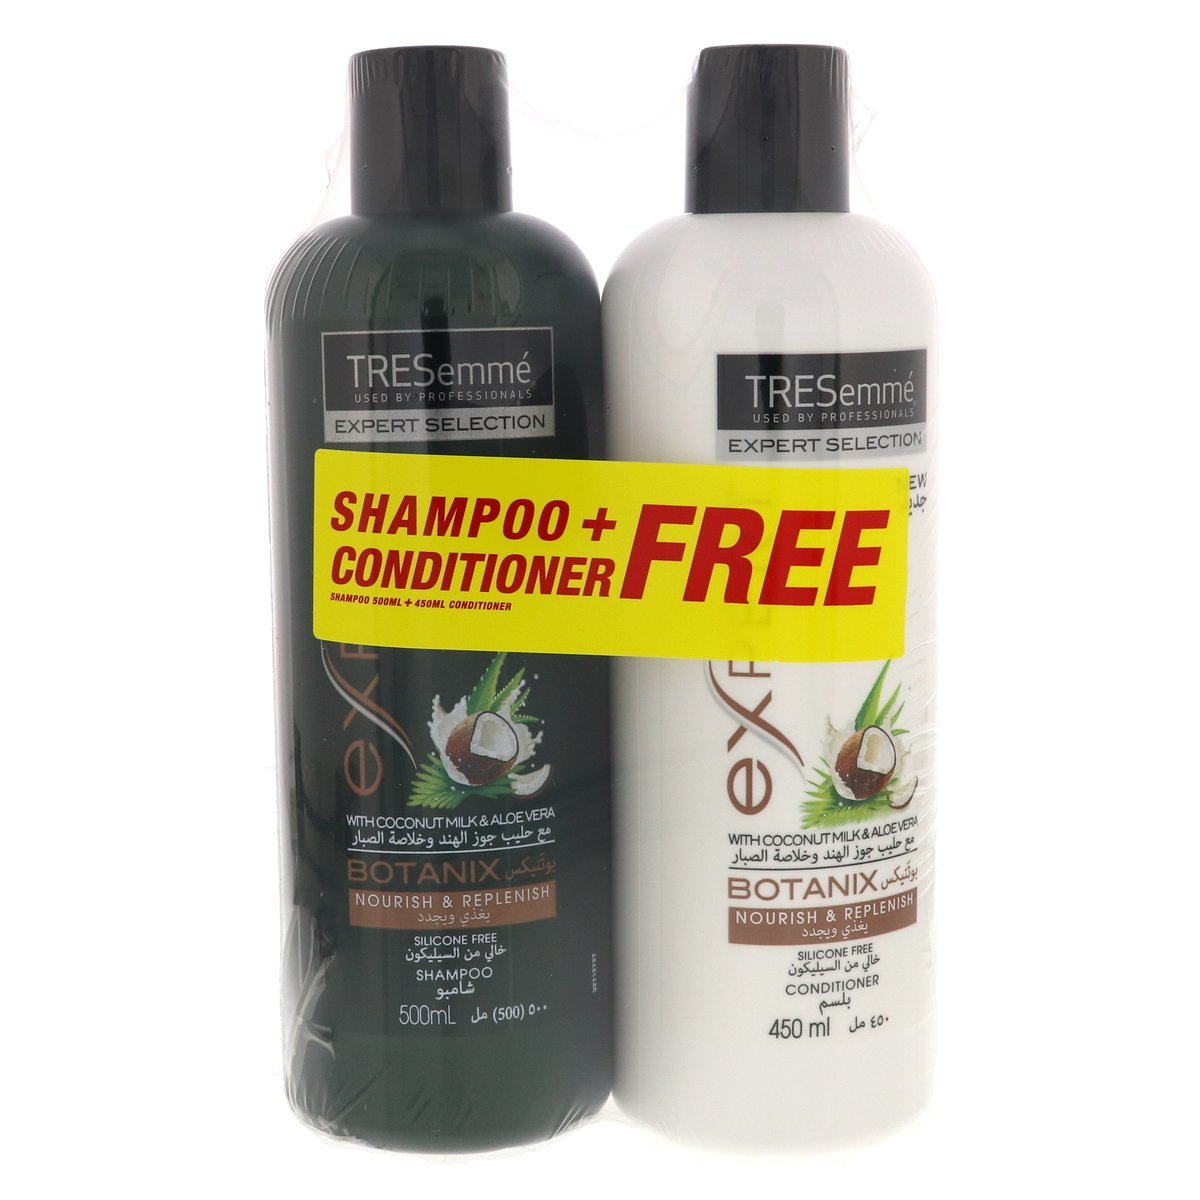 TRESemme Expert Selection Botanix Shampoo 500 ml + Conditioner 450 ml